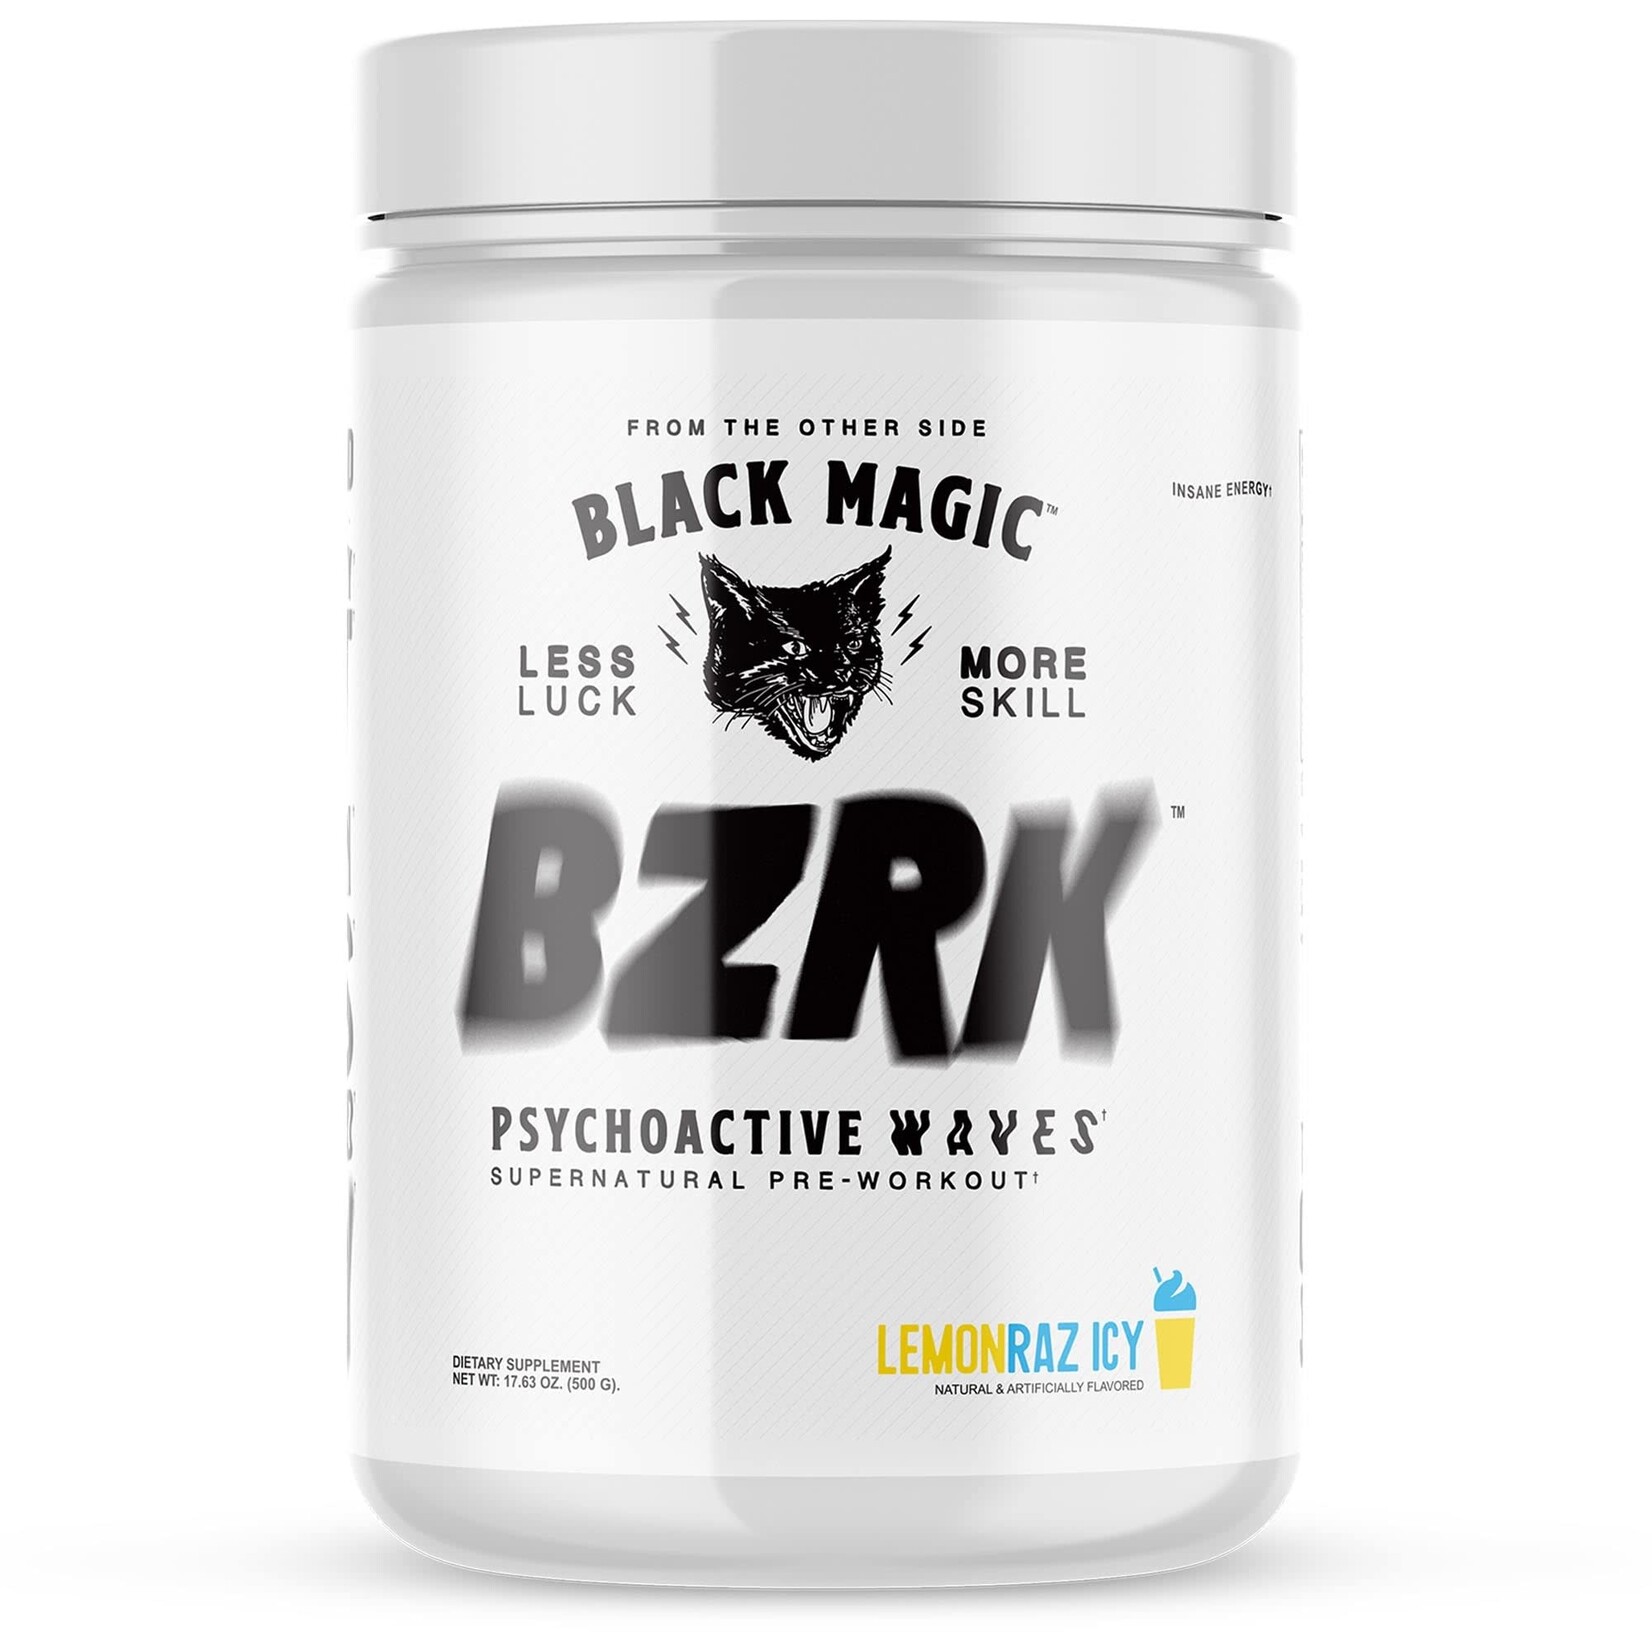 Black Magic Black Magic-BZRK